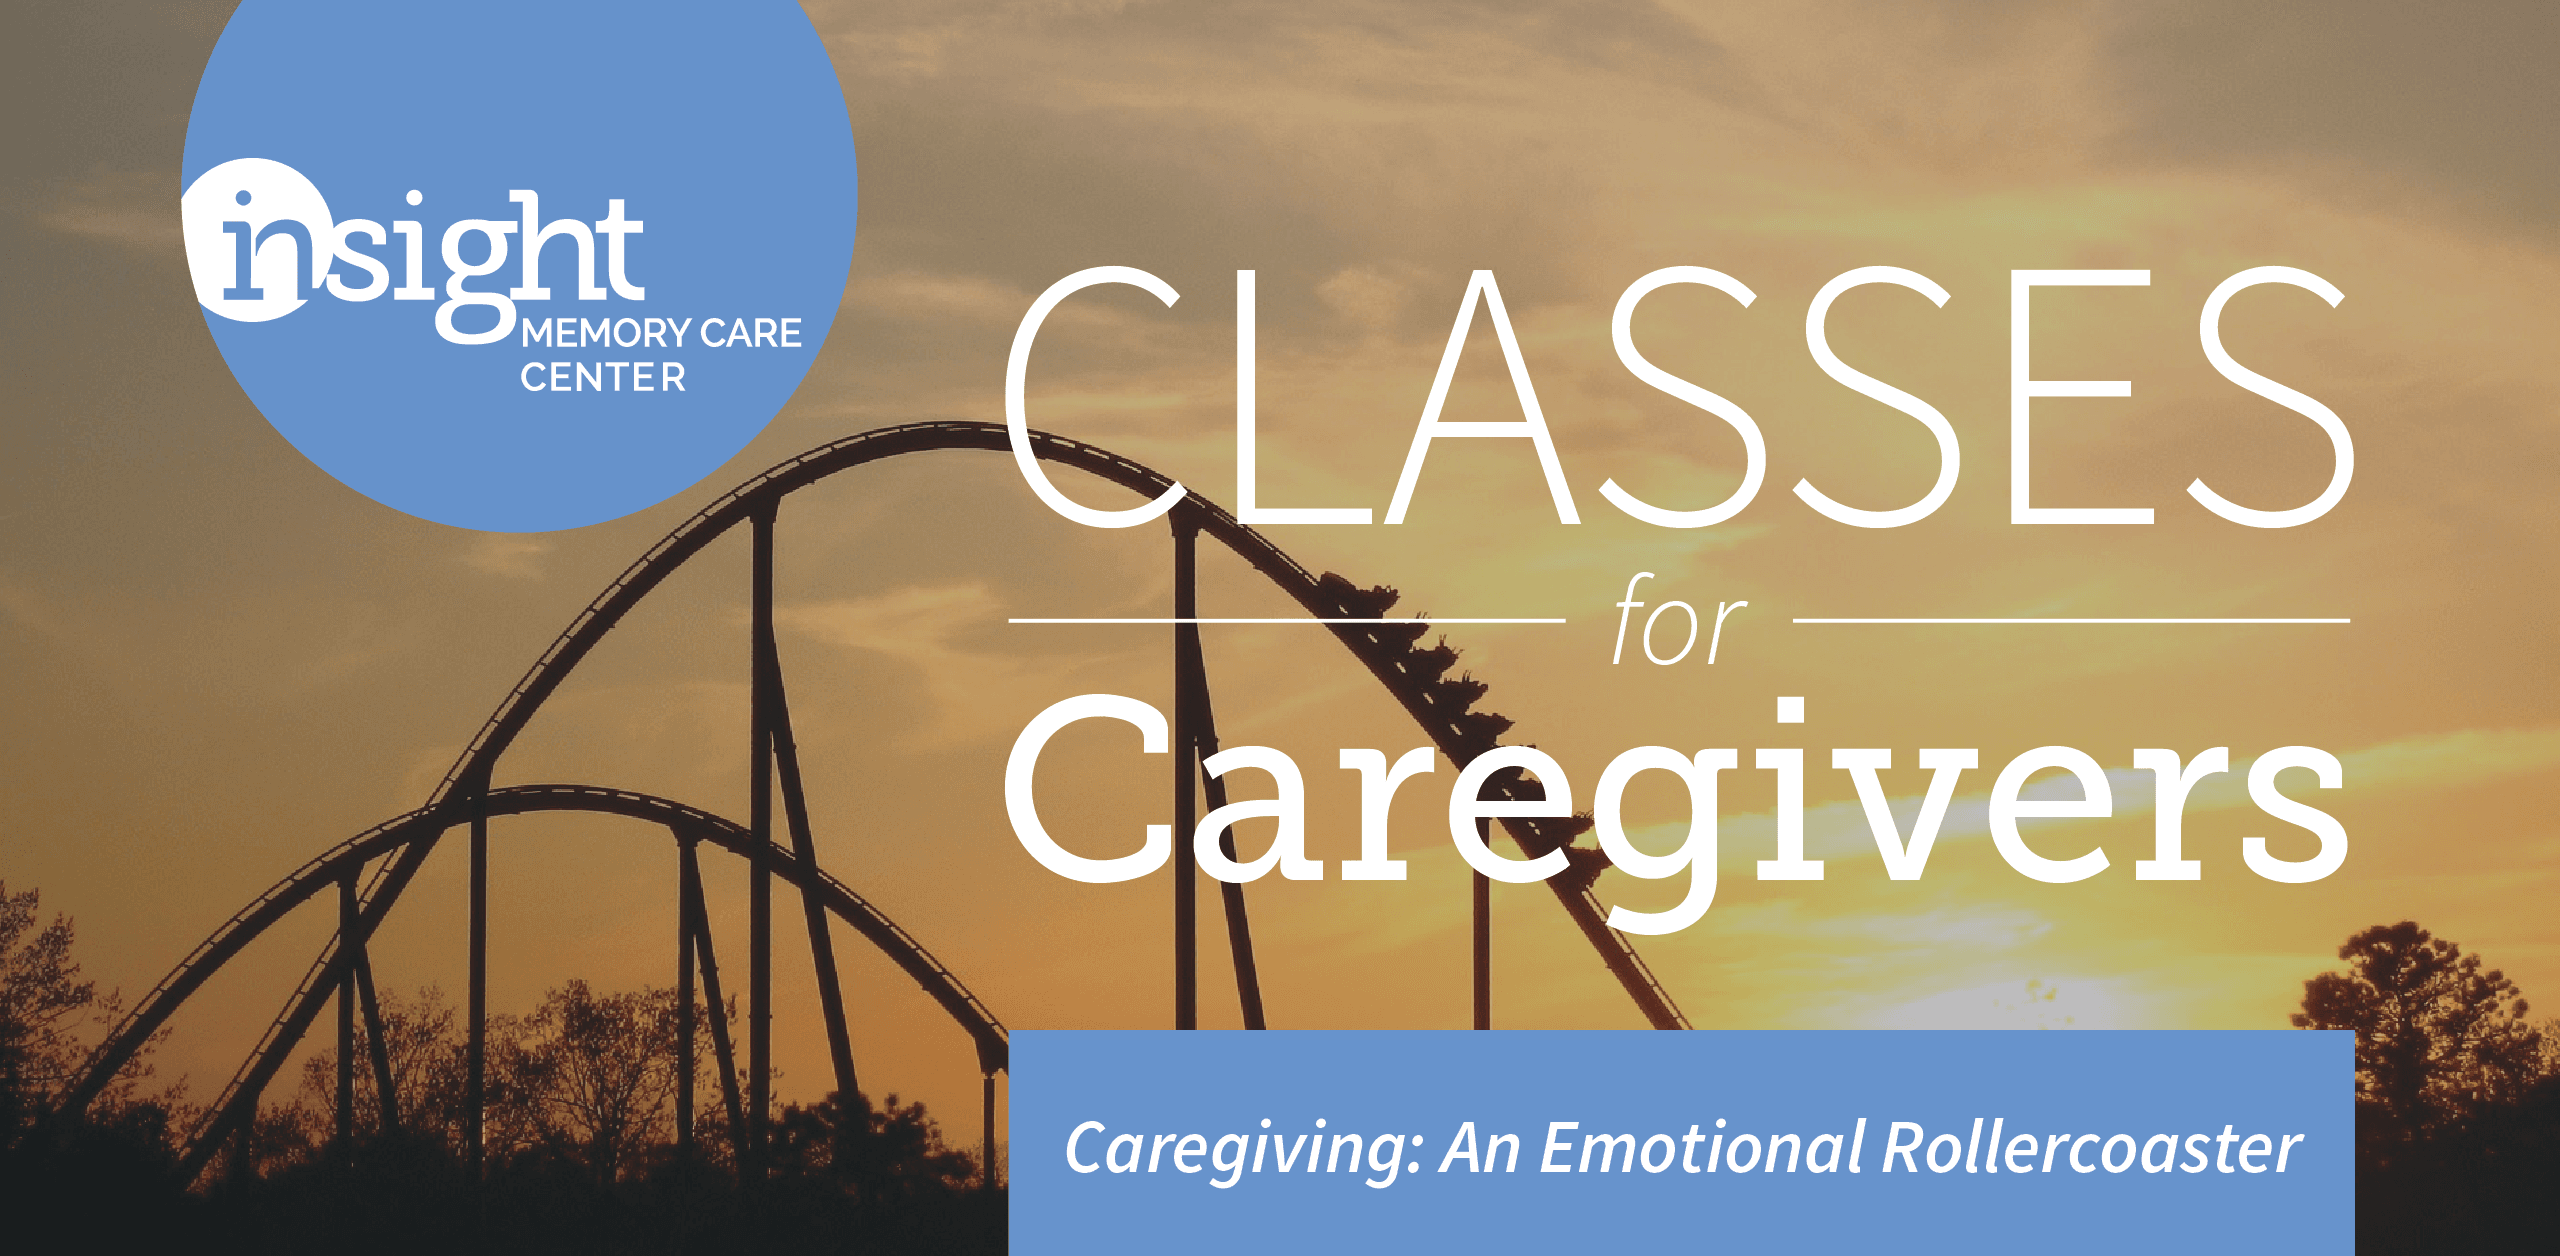 Caregiving: An Emotional Rollercoaster